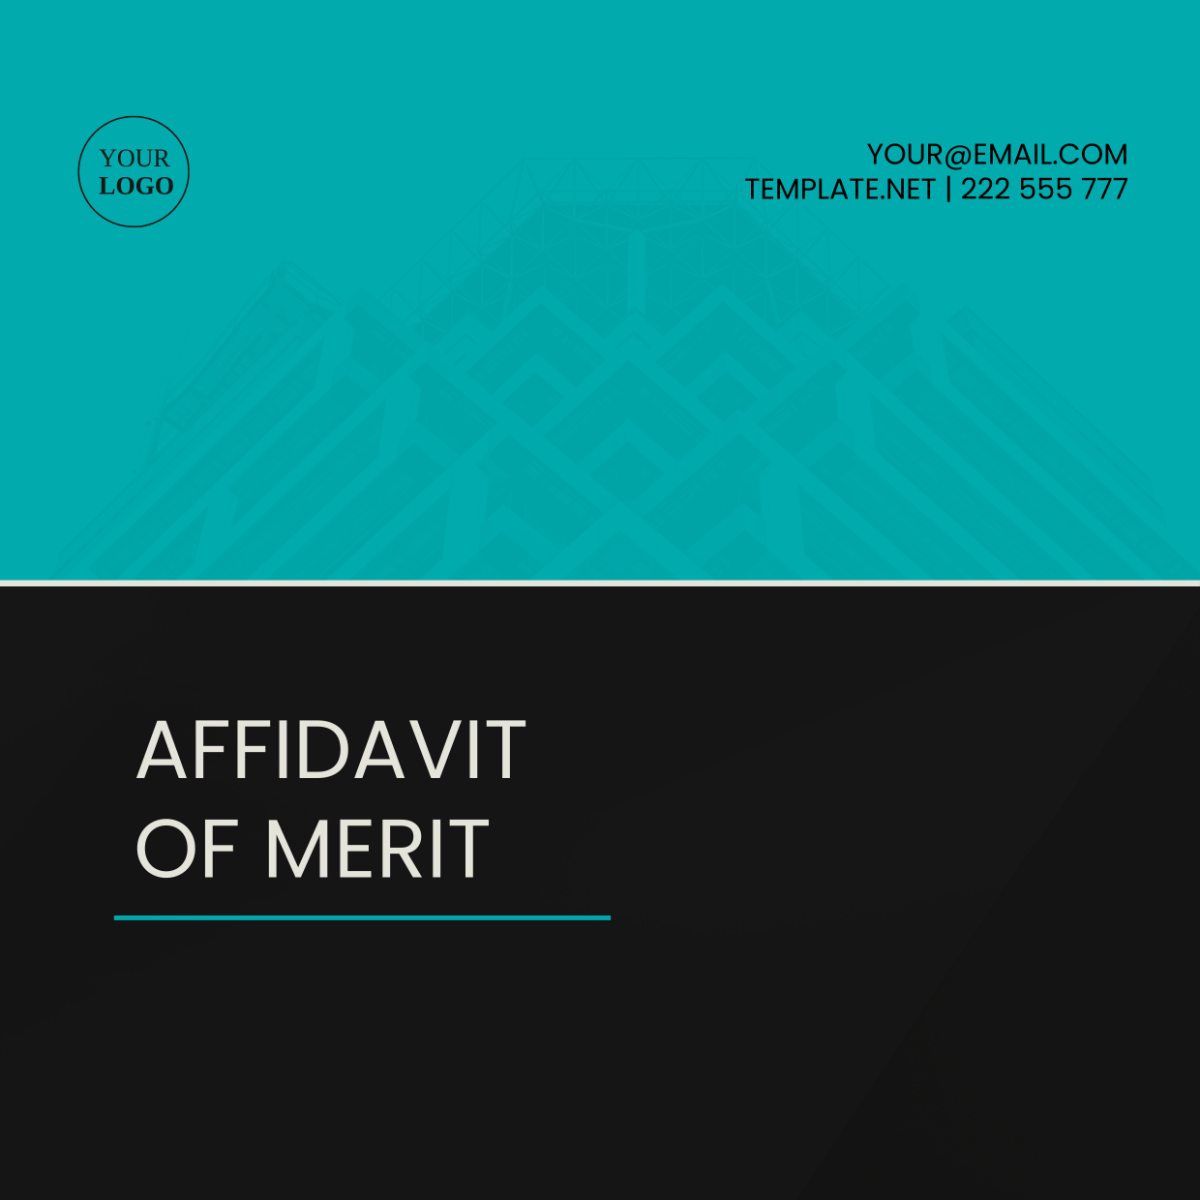 Affidavit of Merit Template